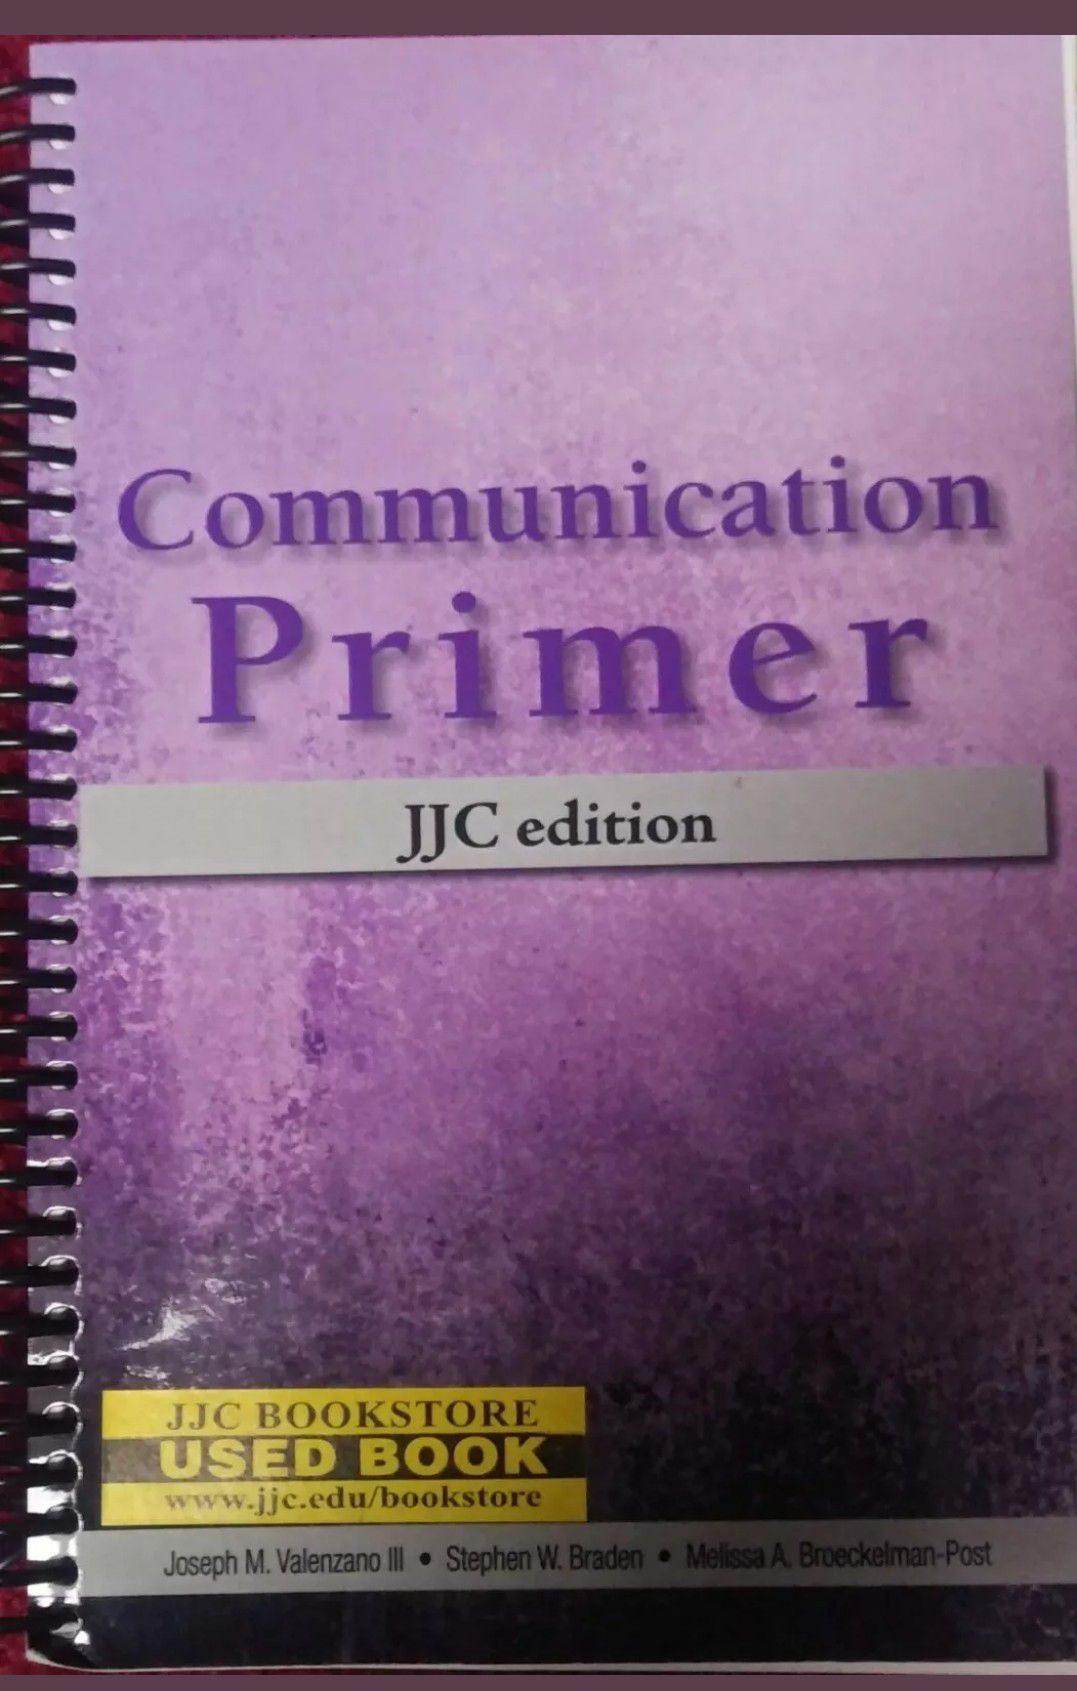 Communication Primer JJC Edition